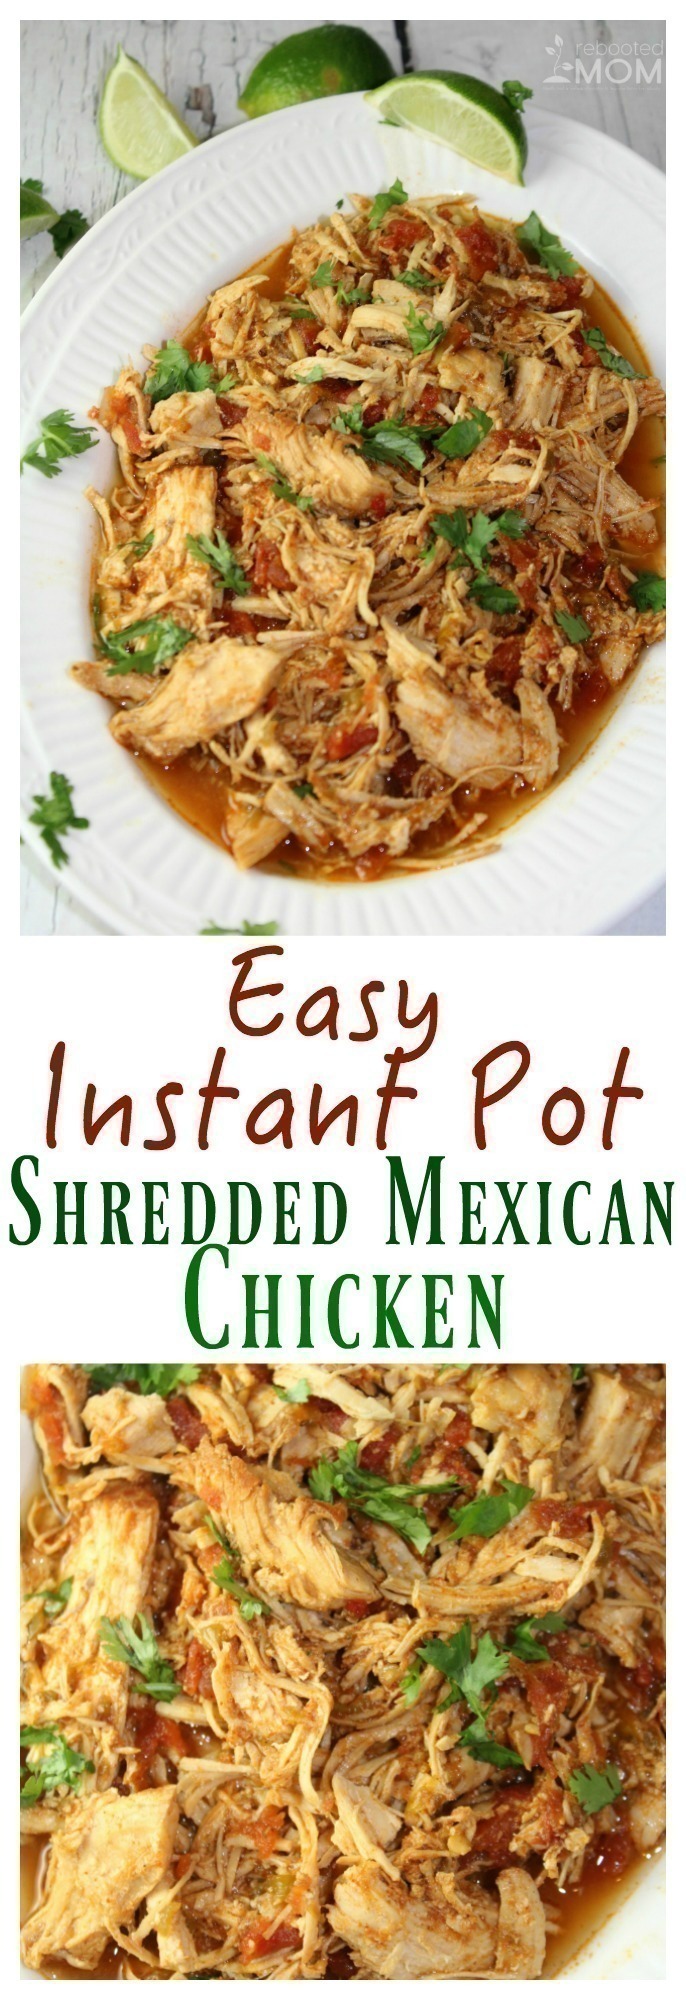 Easy Instant Pot Shredded Mexican Chicken